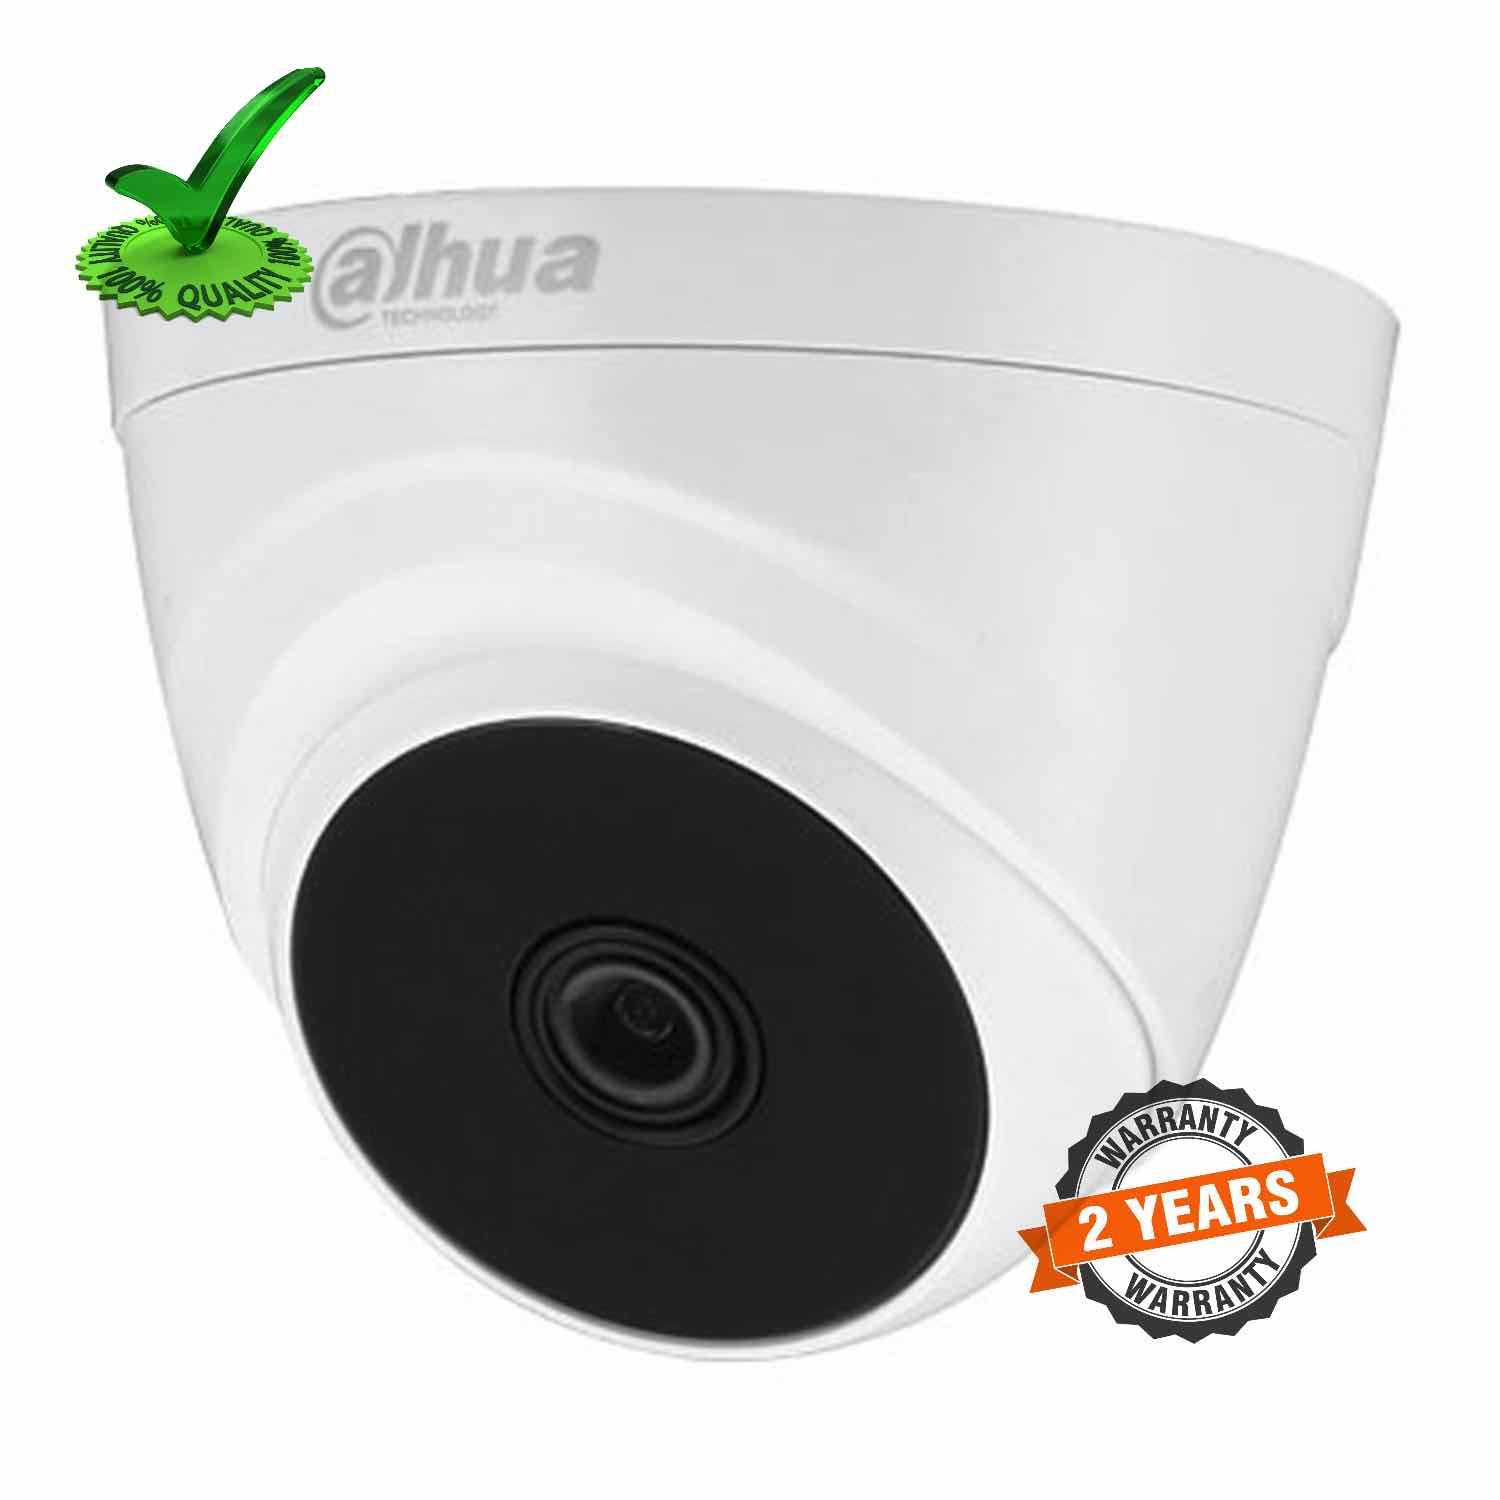 Dahua DH-HAC-T1A21P 2mp Indoor Dome Camera